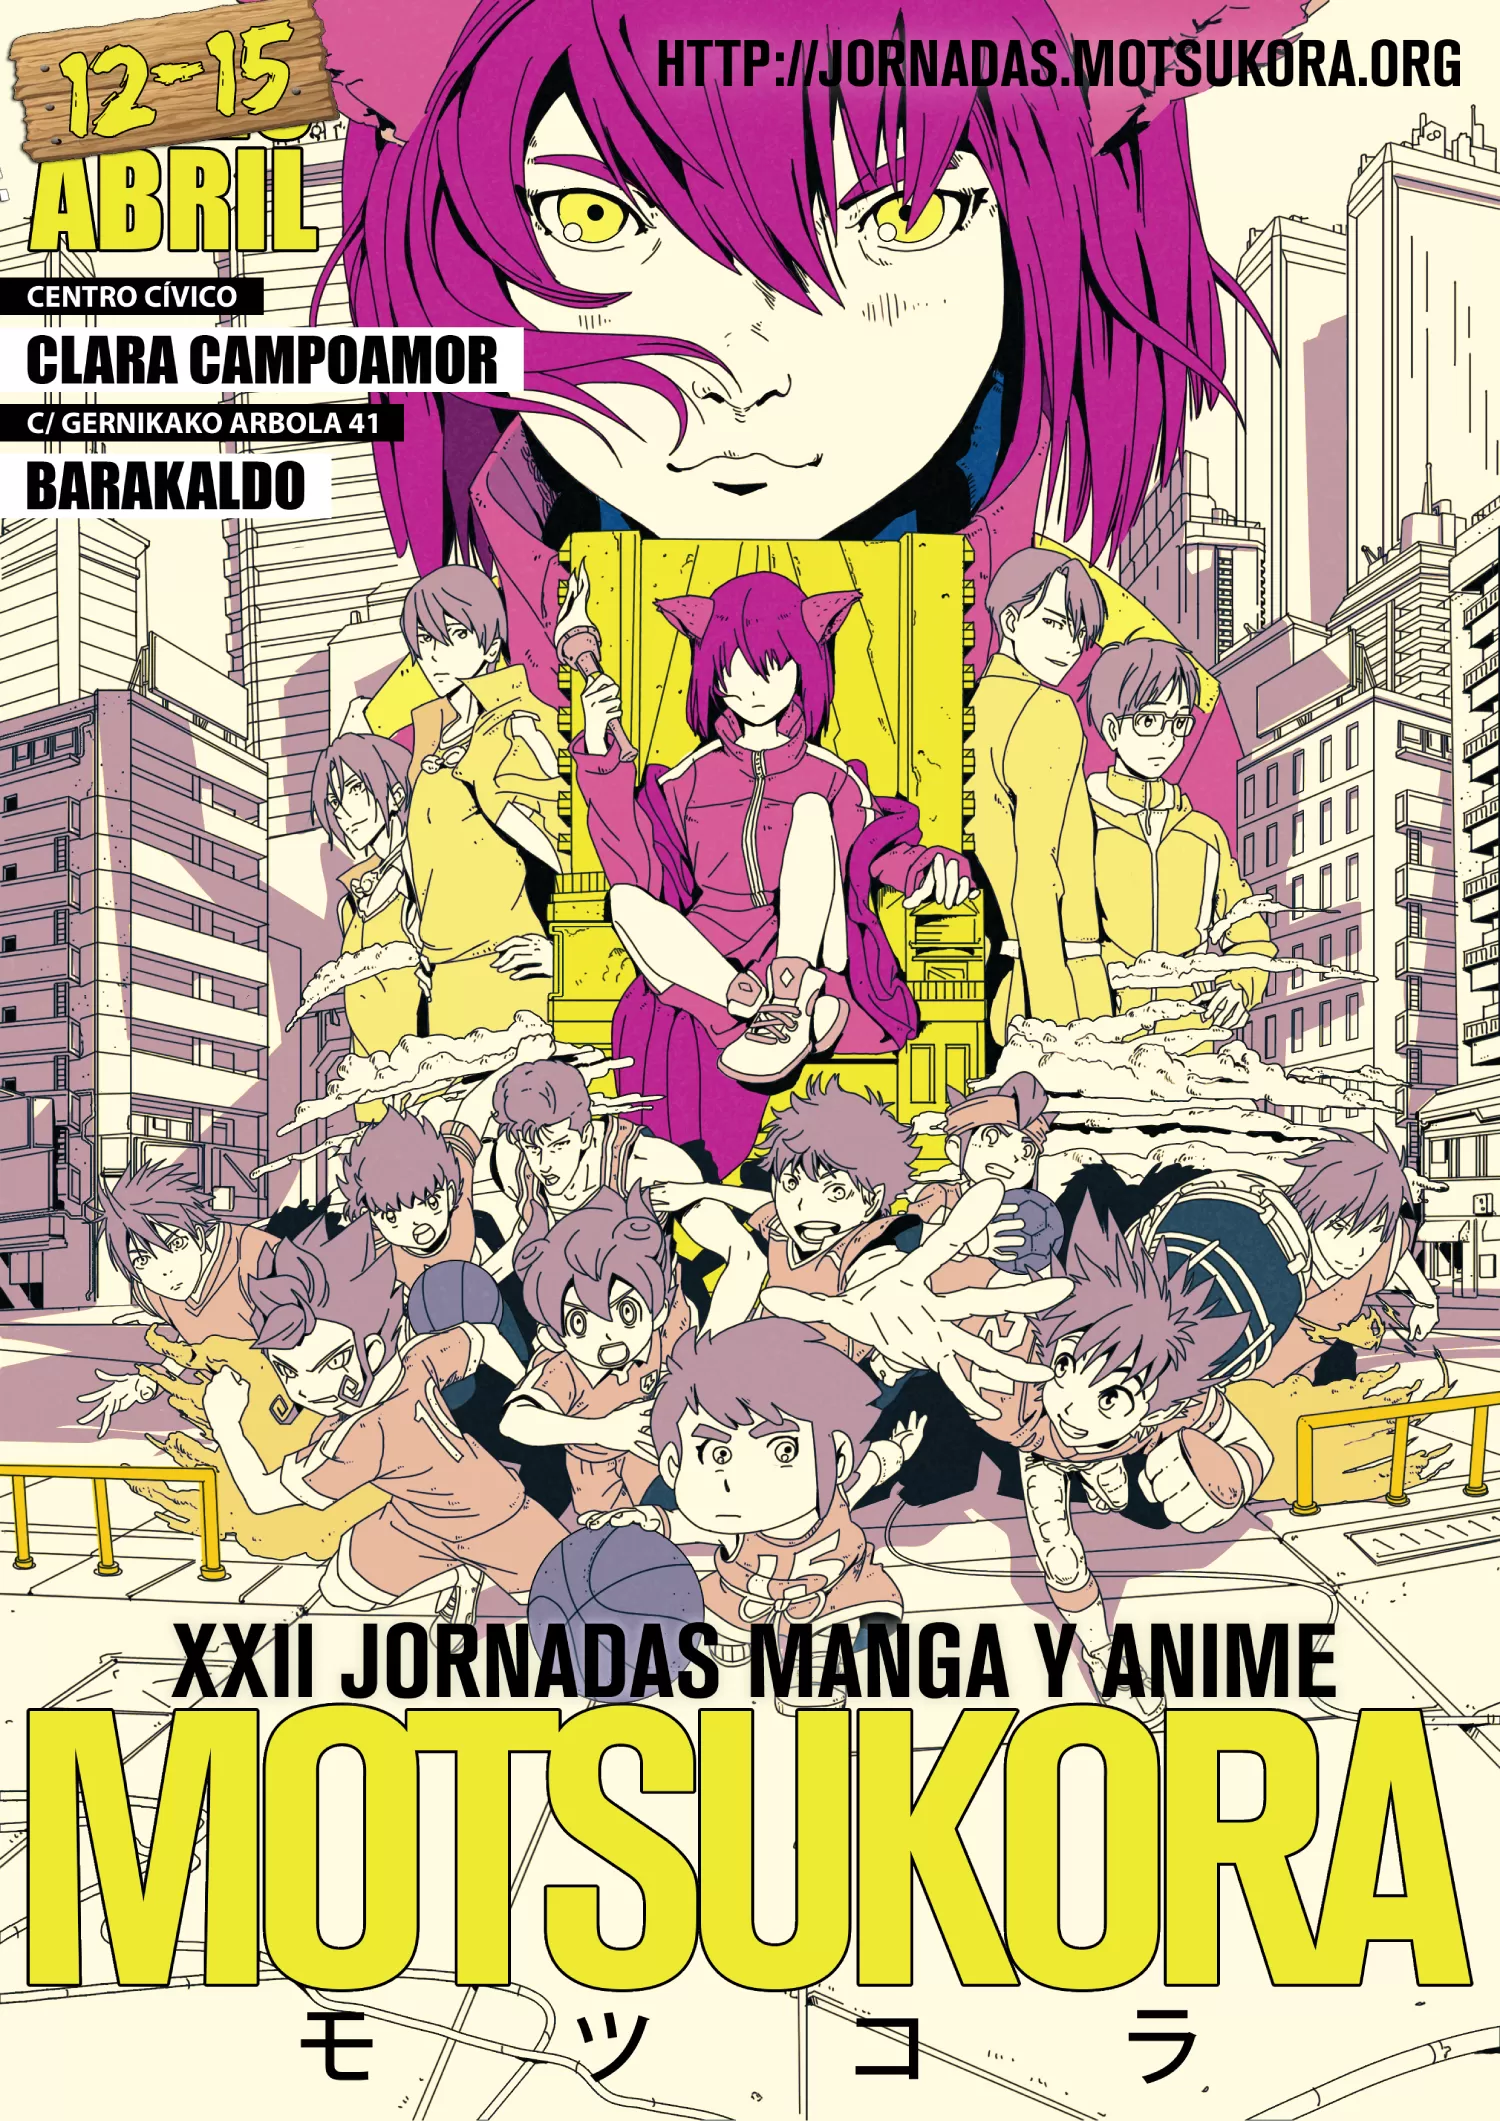 Cartel de las XXII Jornadas Manga y Anime de Motsukora